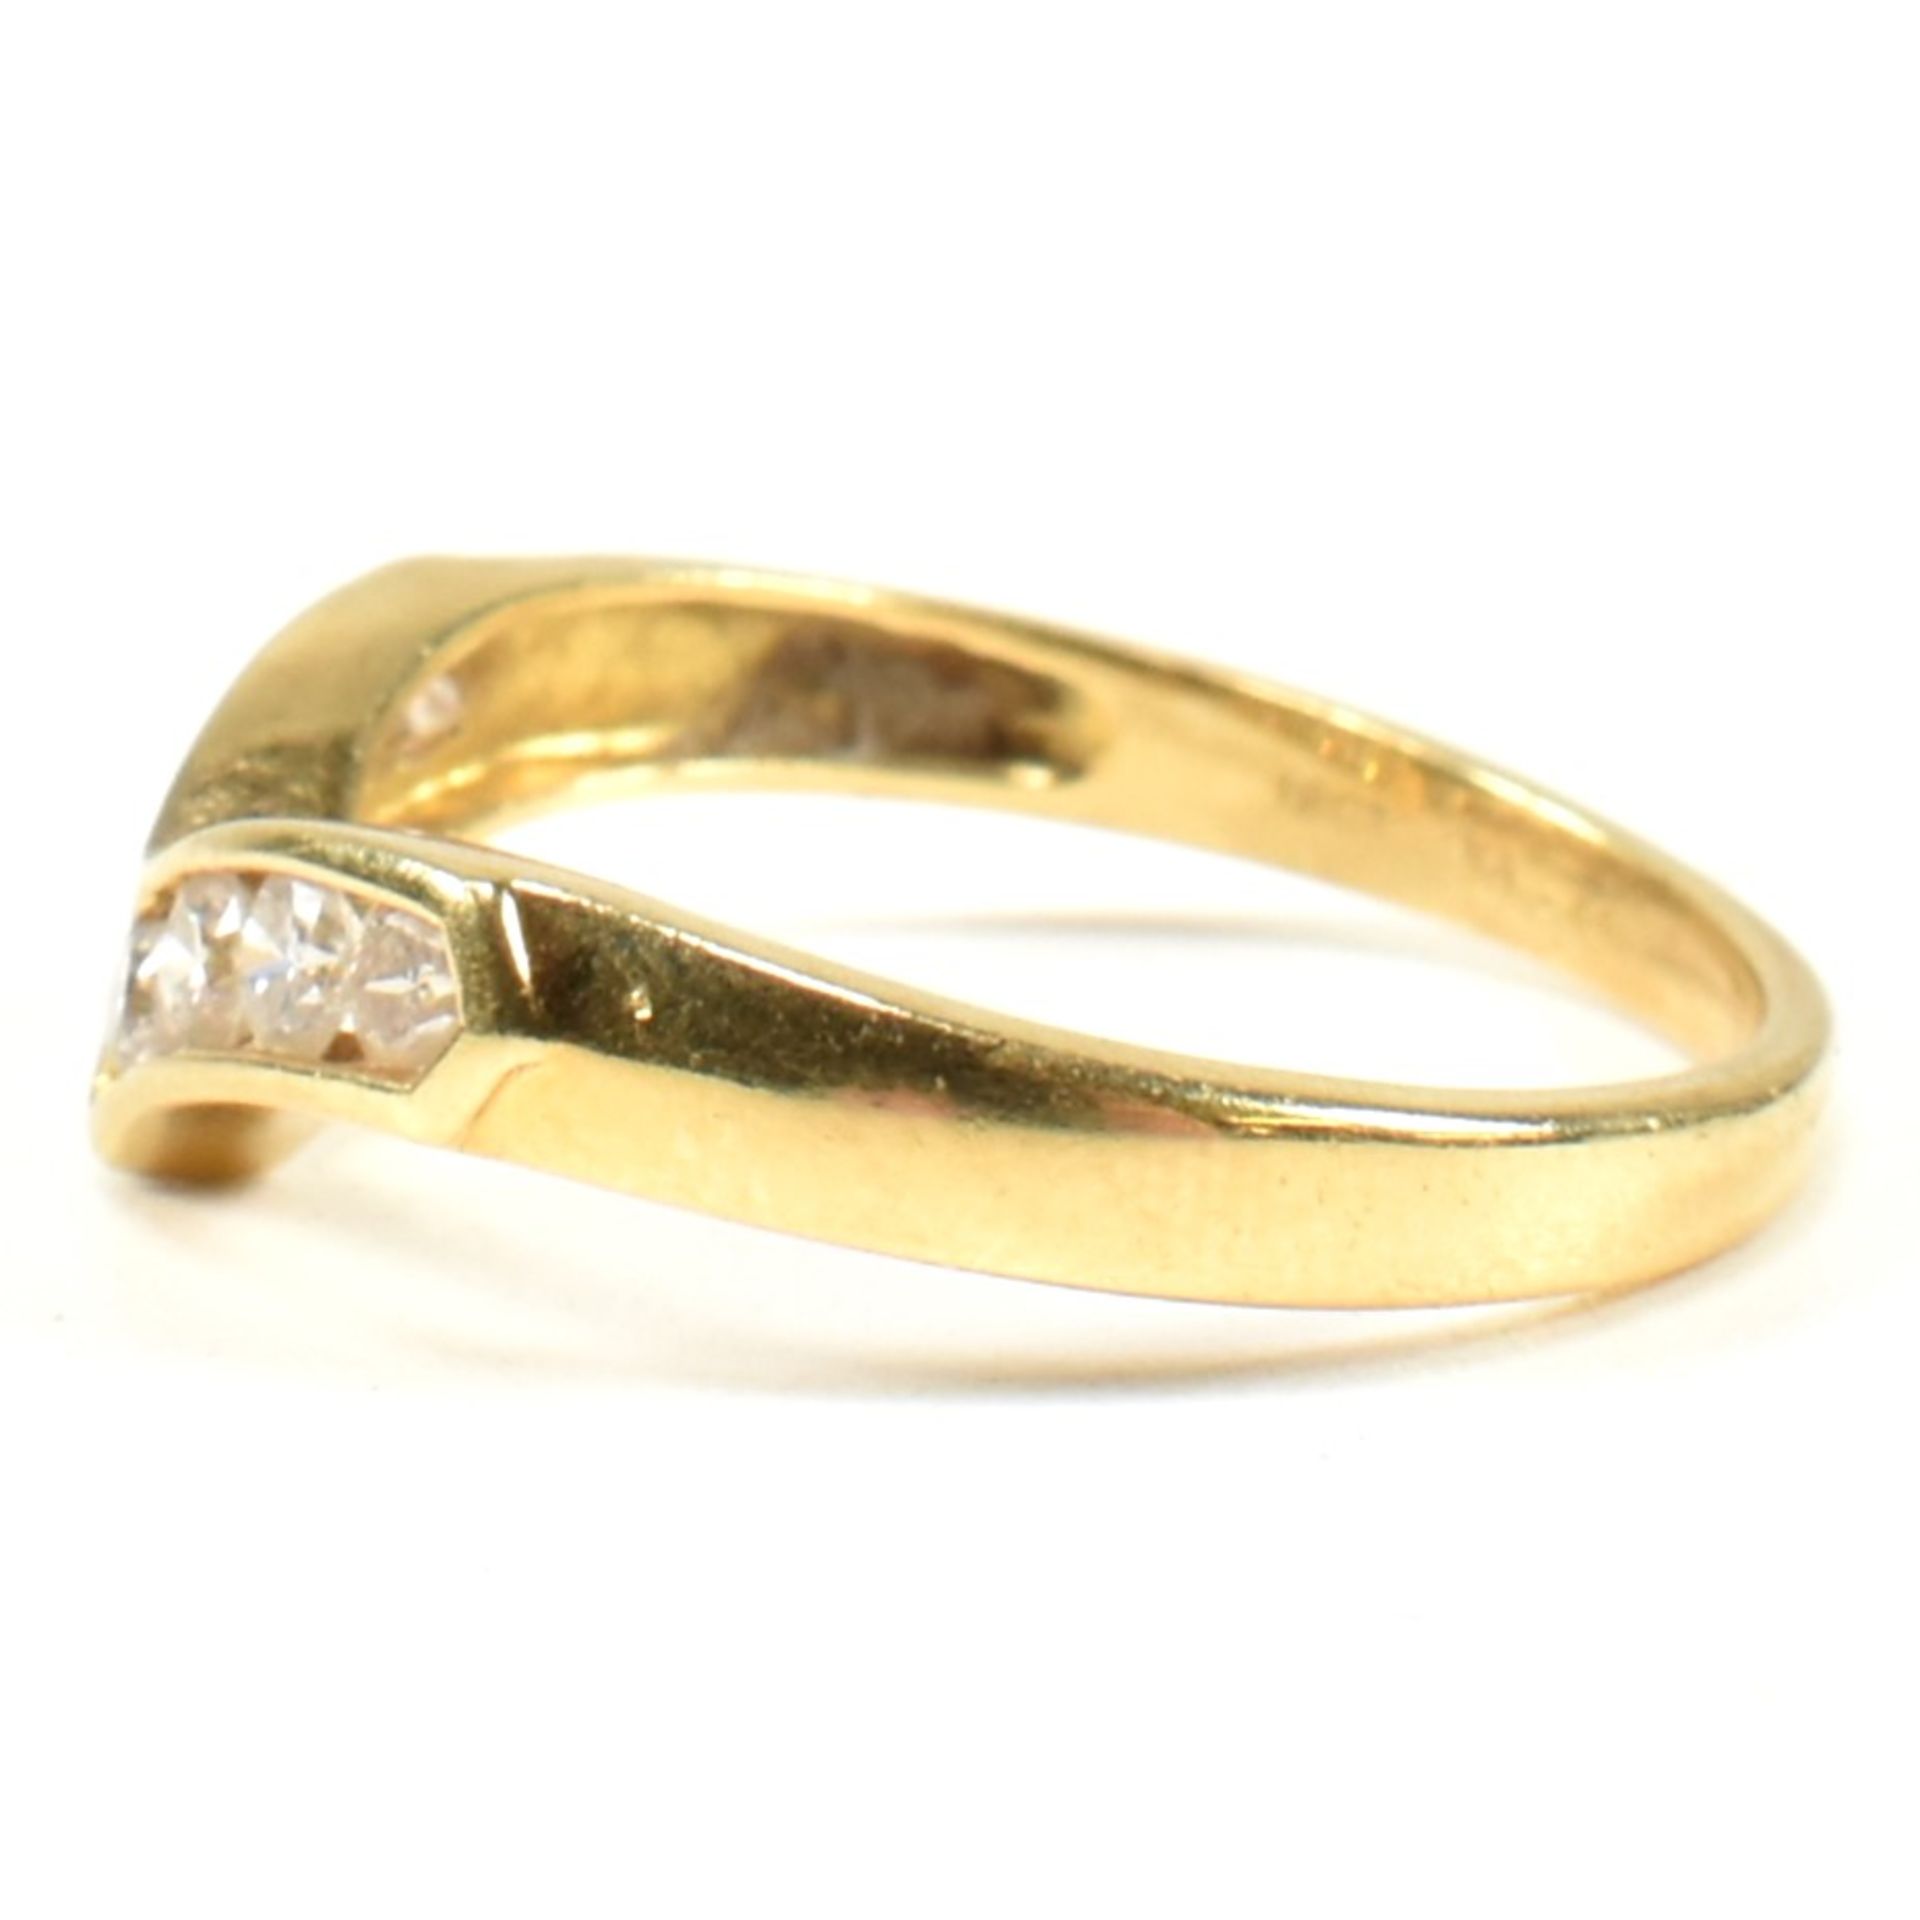 HALLMARKED 18CT GOLD & DIAMOND WISHBONE RING - Image 7 of 9